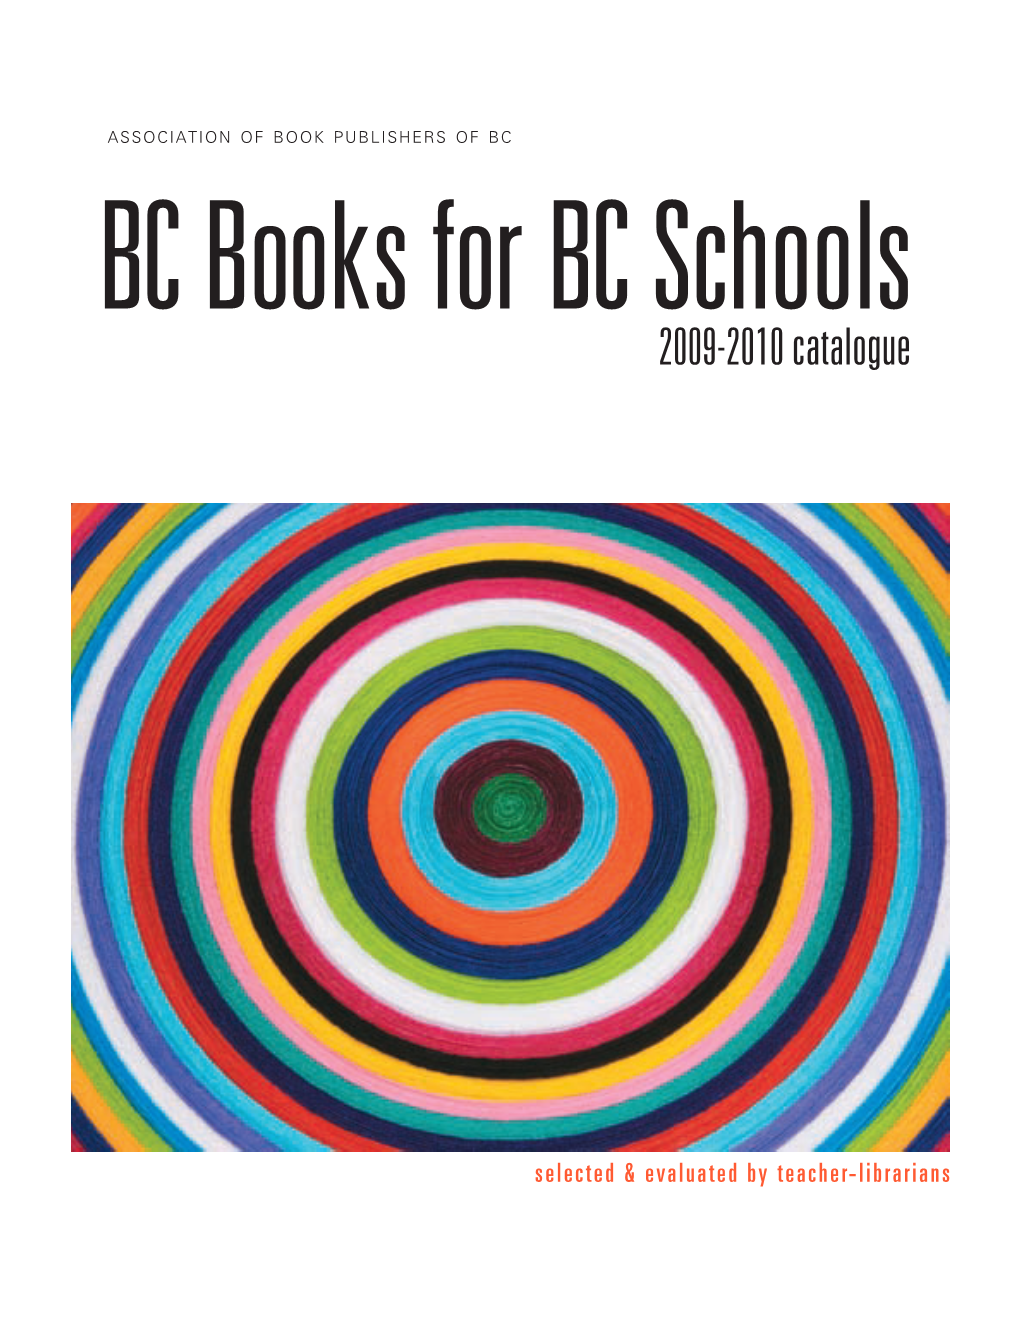 BC Books for BC Schools 2009/10